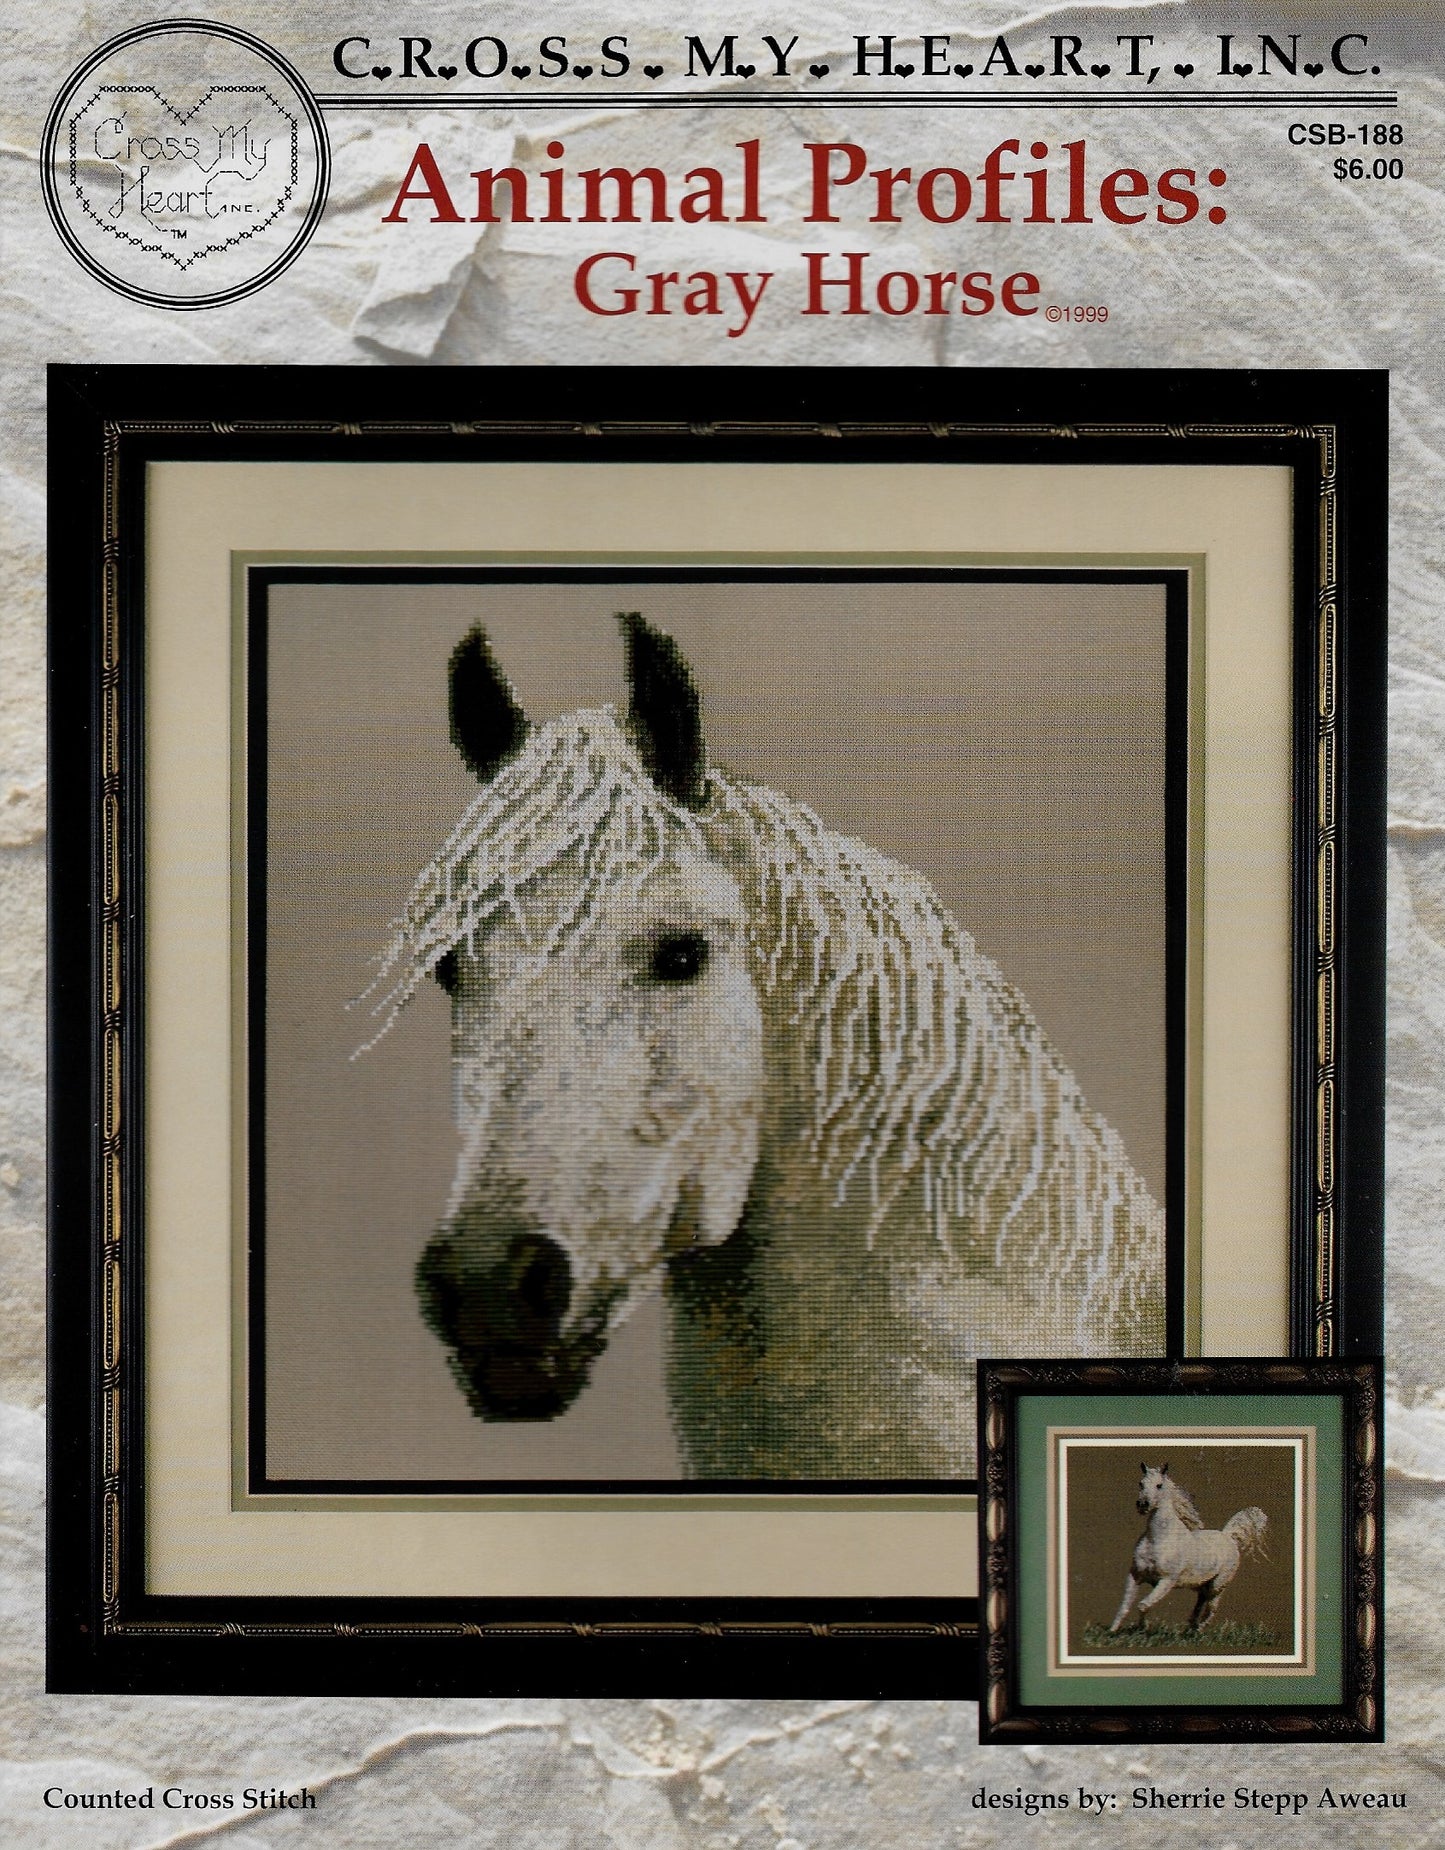 Cross My Heart Gray Horse CSB-188 Animal Profiles cross stitch pattern